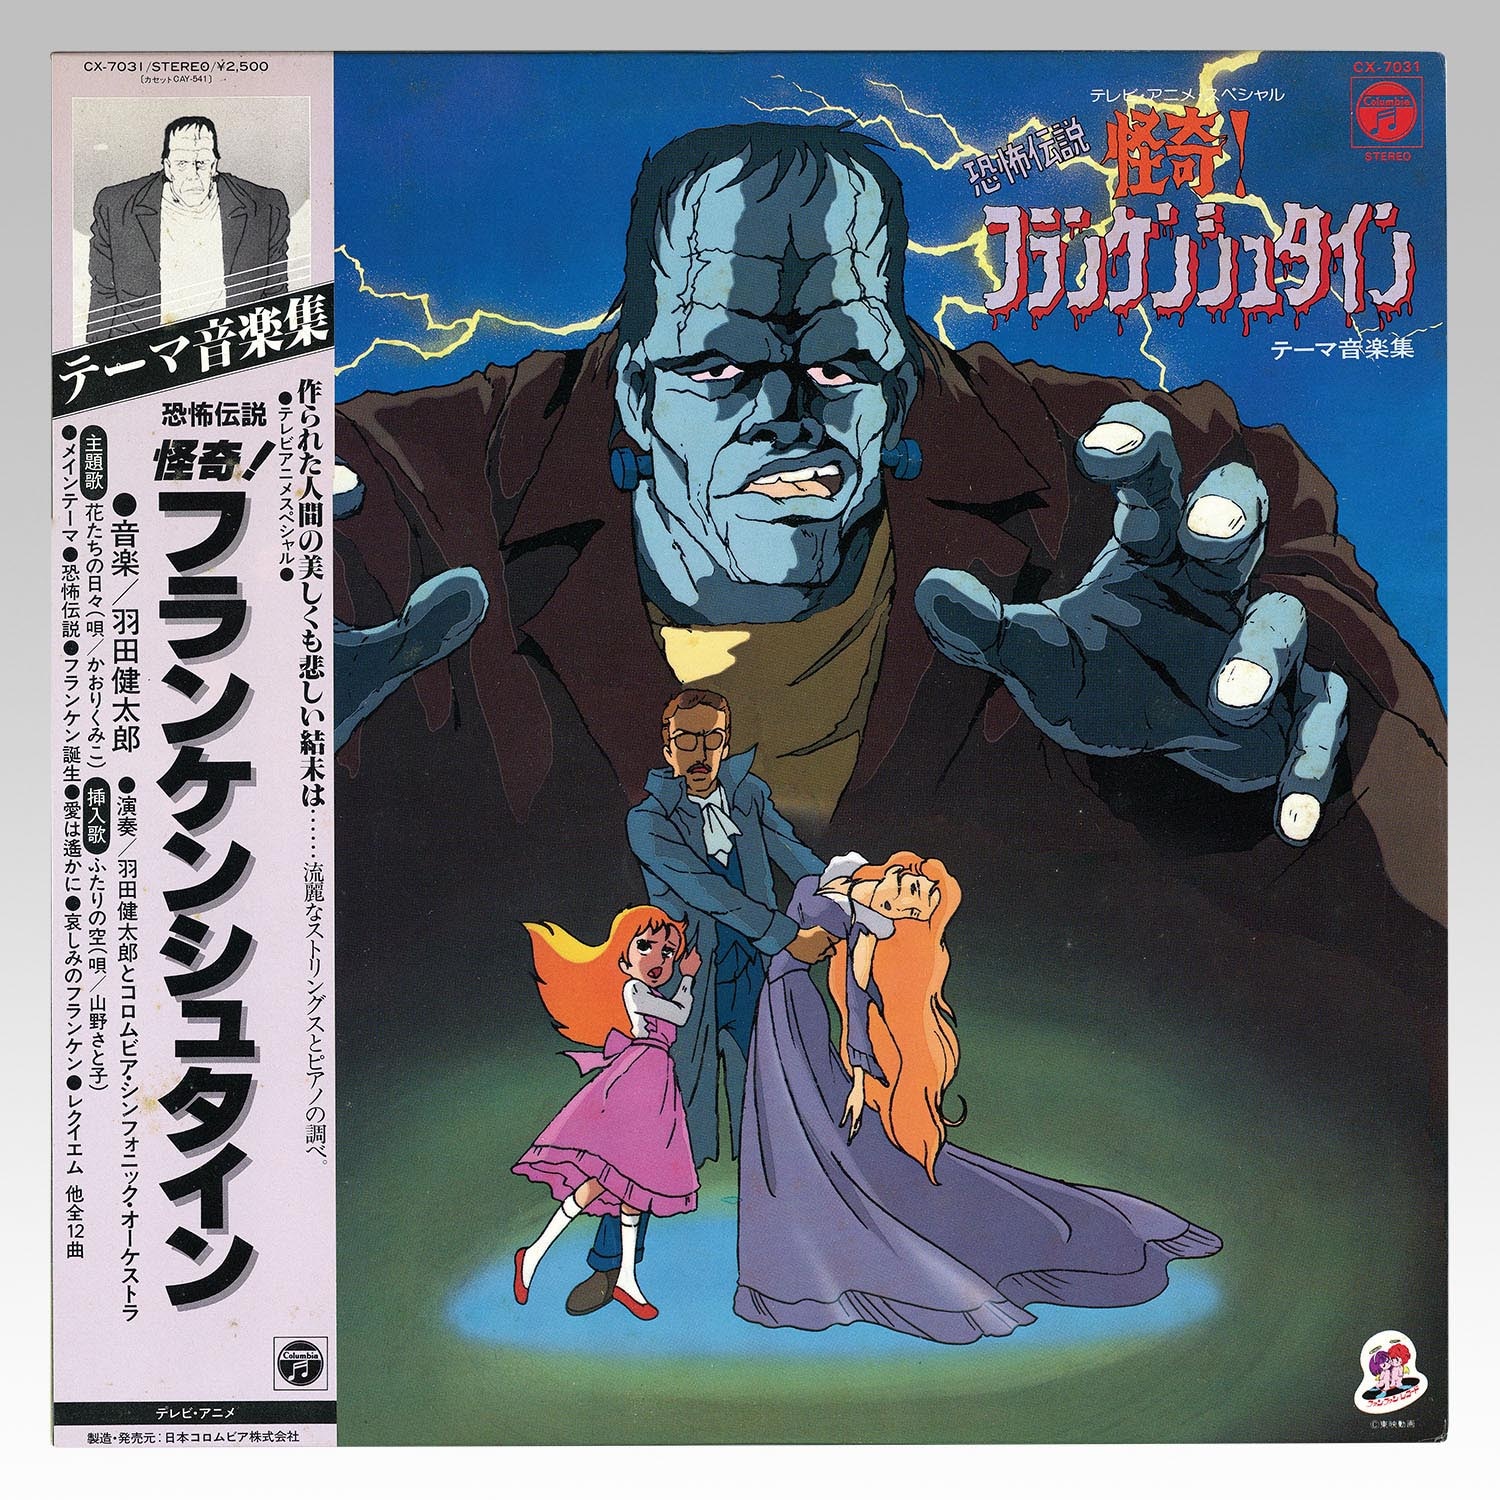 Frankenstein (voiced by Hirakawa Daisuke) | Anime Anime Global